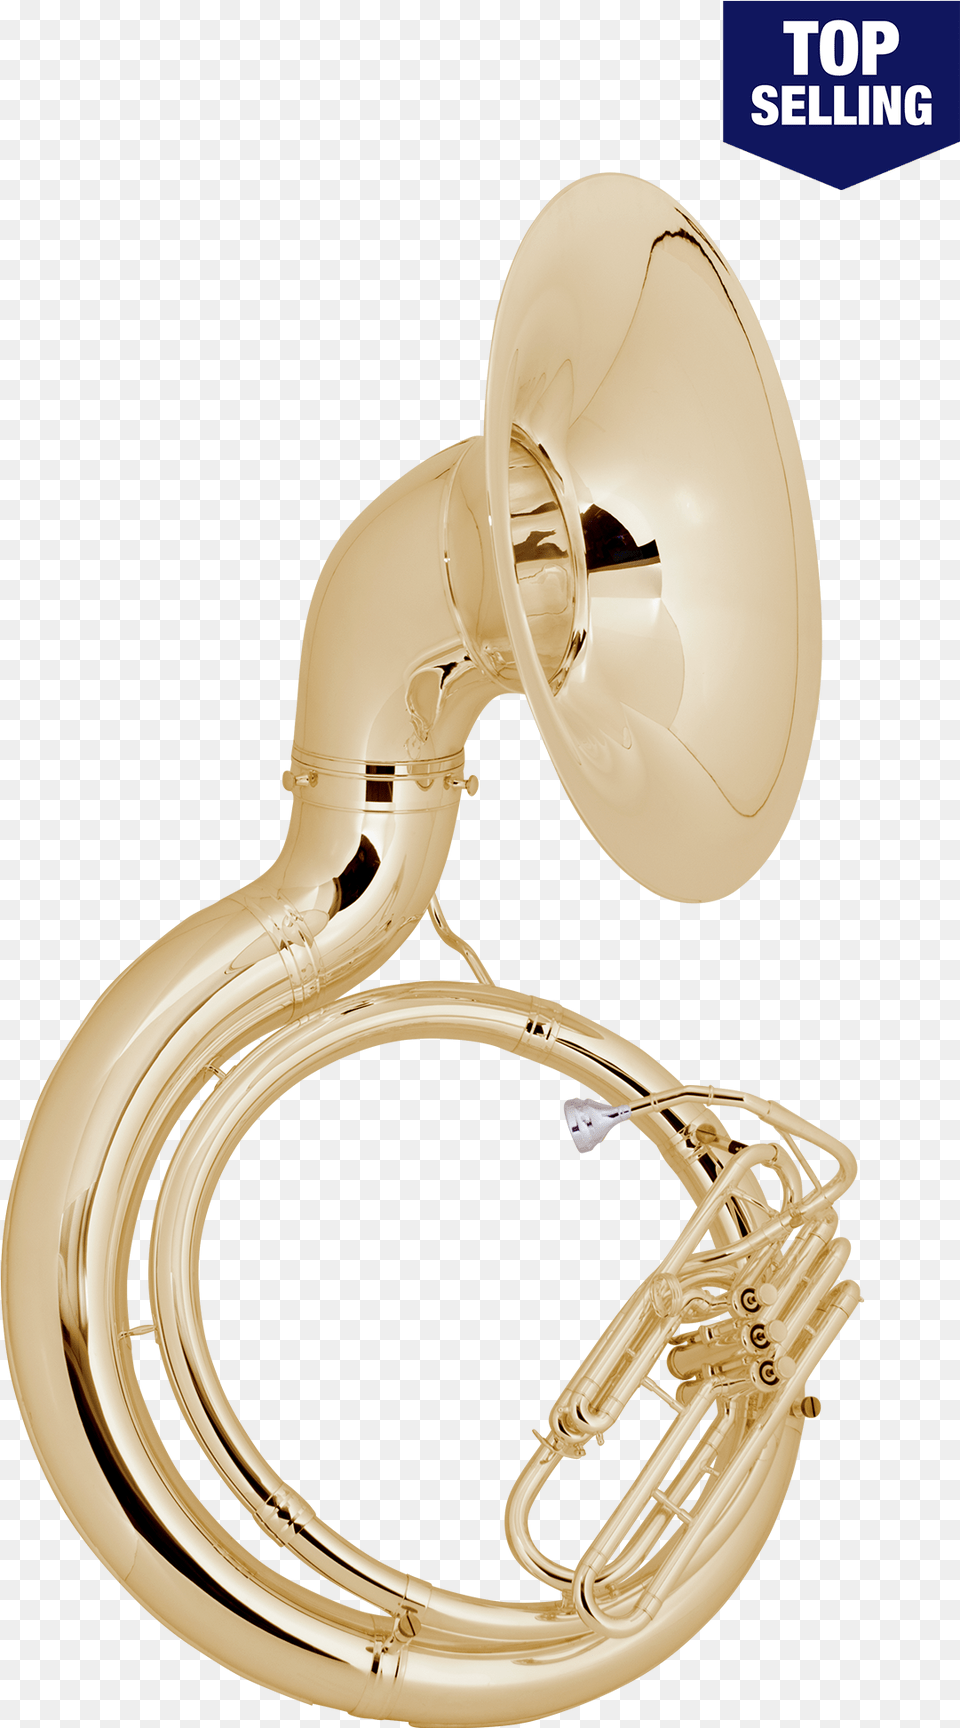 Brass Instrumentmusical Instrumentwind King Sousaphones, Brass Section, Horn, Musical Instrument, Tuba Png Image